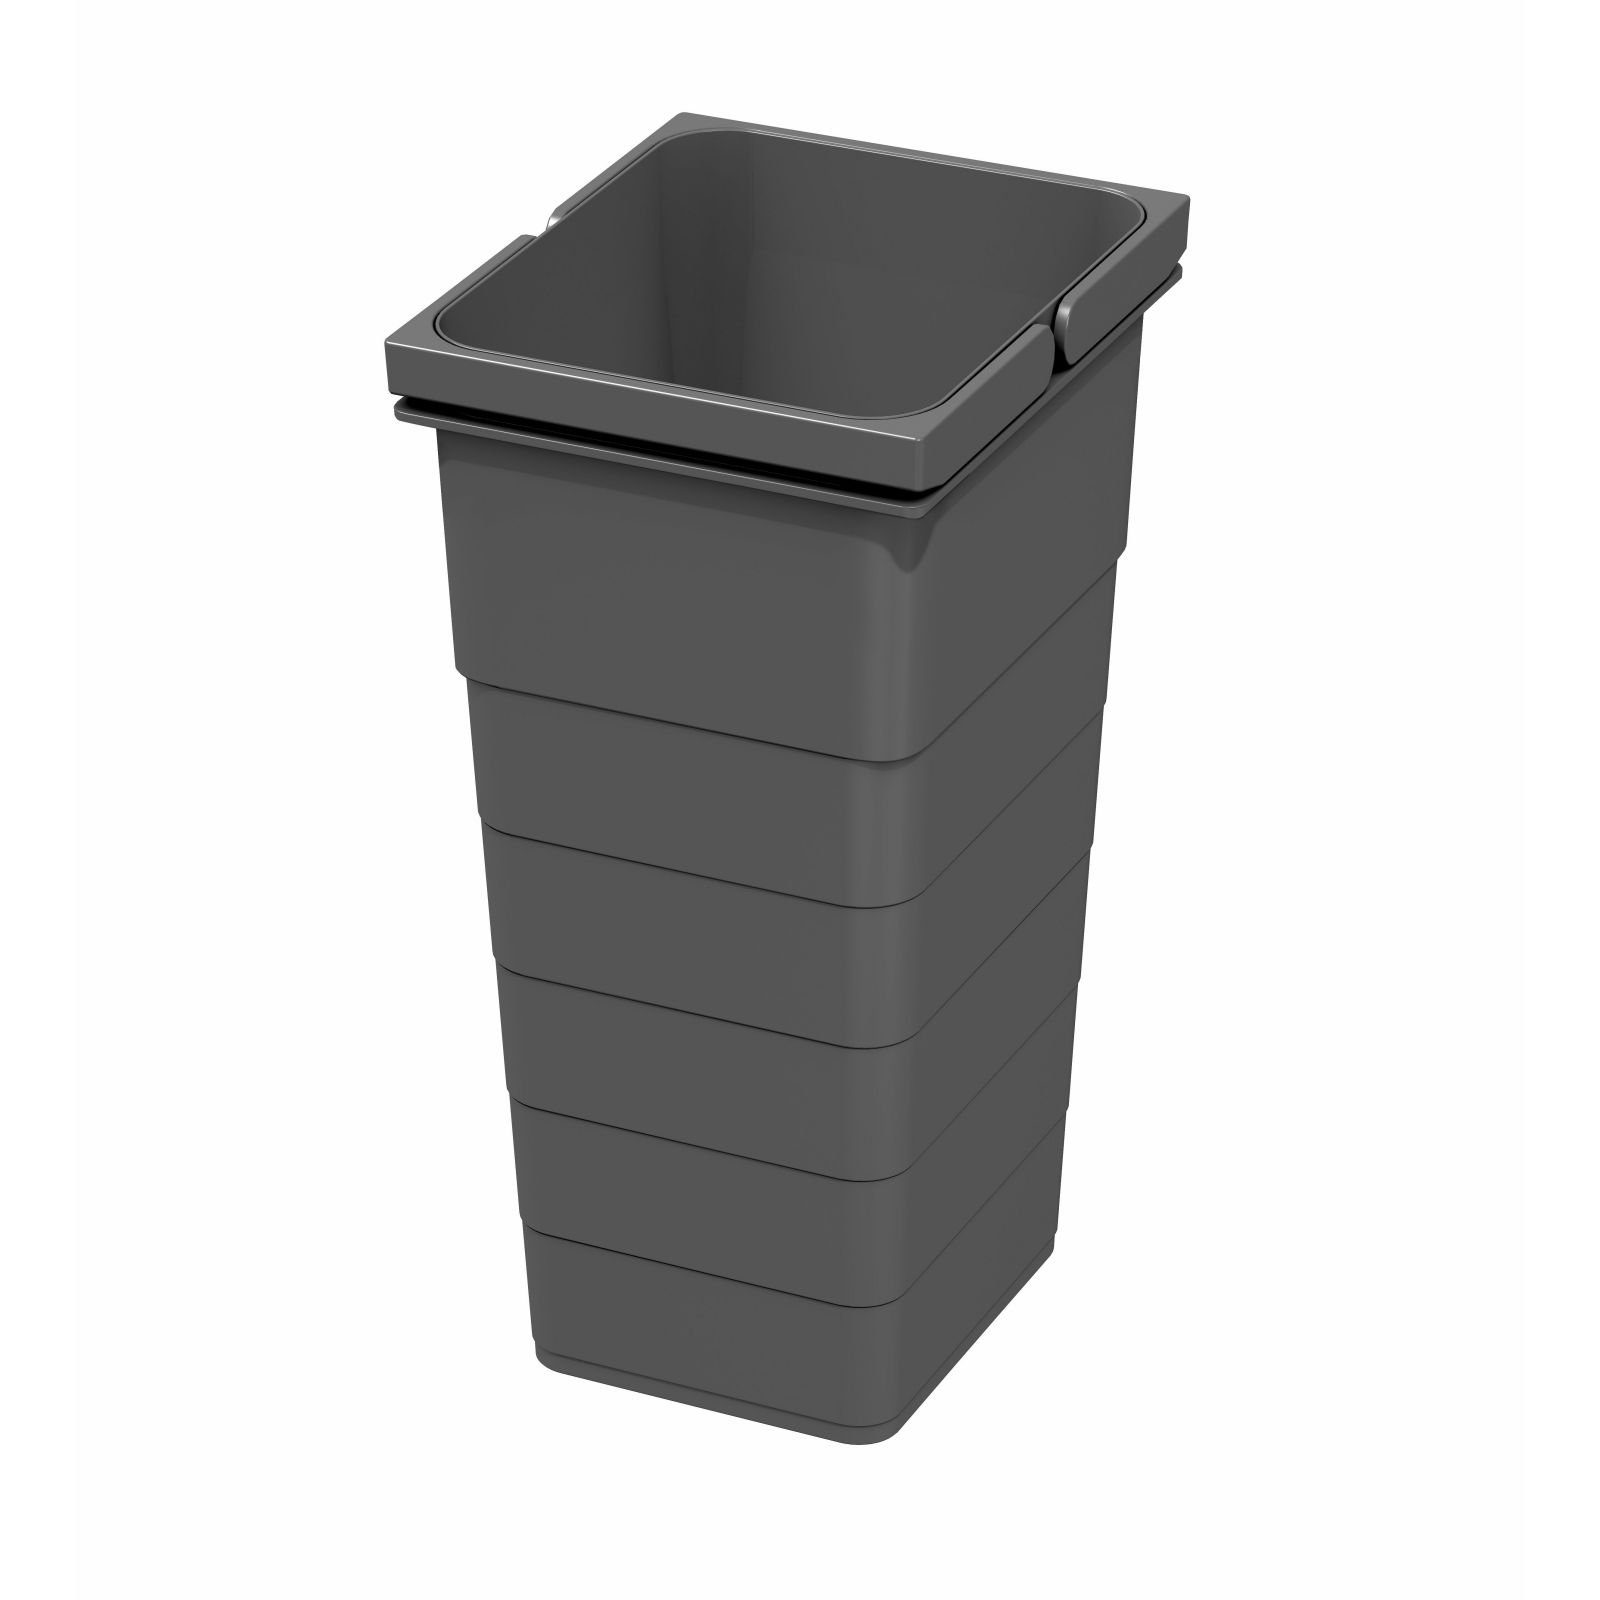 SO-TECH® Mülltrennsystem Ninka eins2vier Abfallsammler Höhe: 330 mm Volumen: 11,5 Liter, 229 x 205 mm dunkelgrau Recycling Behälter Abfall